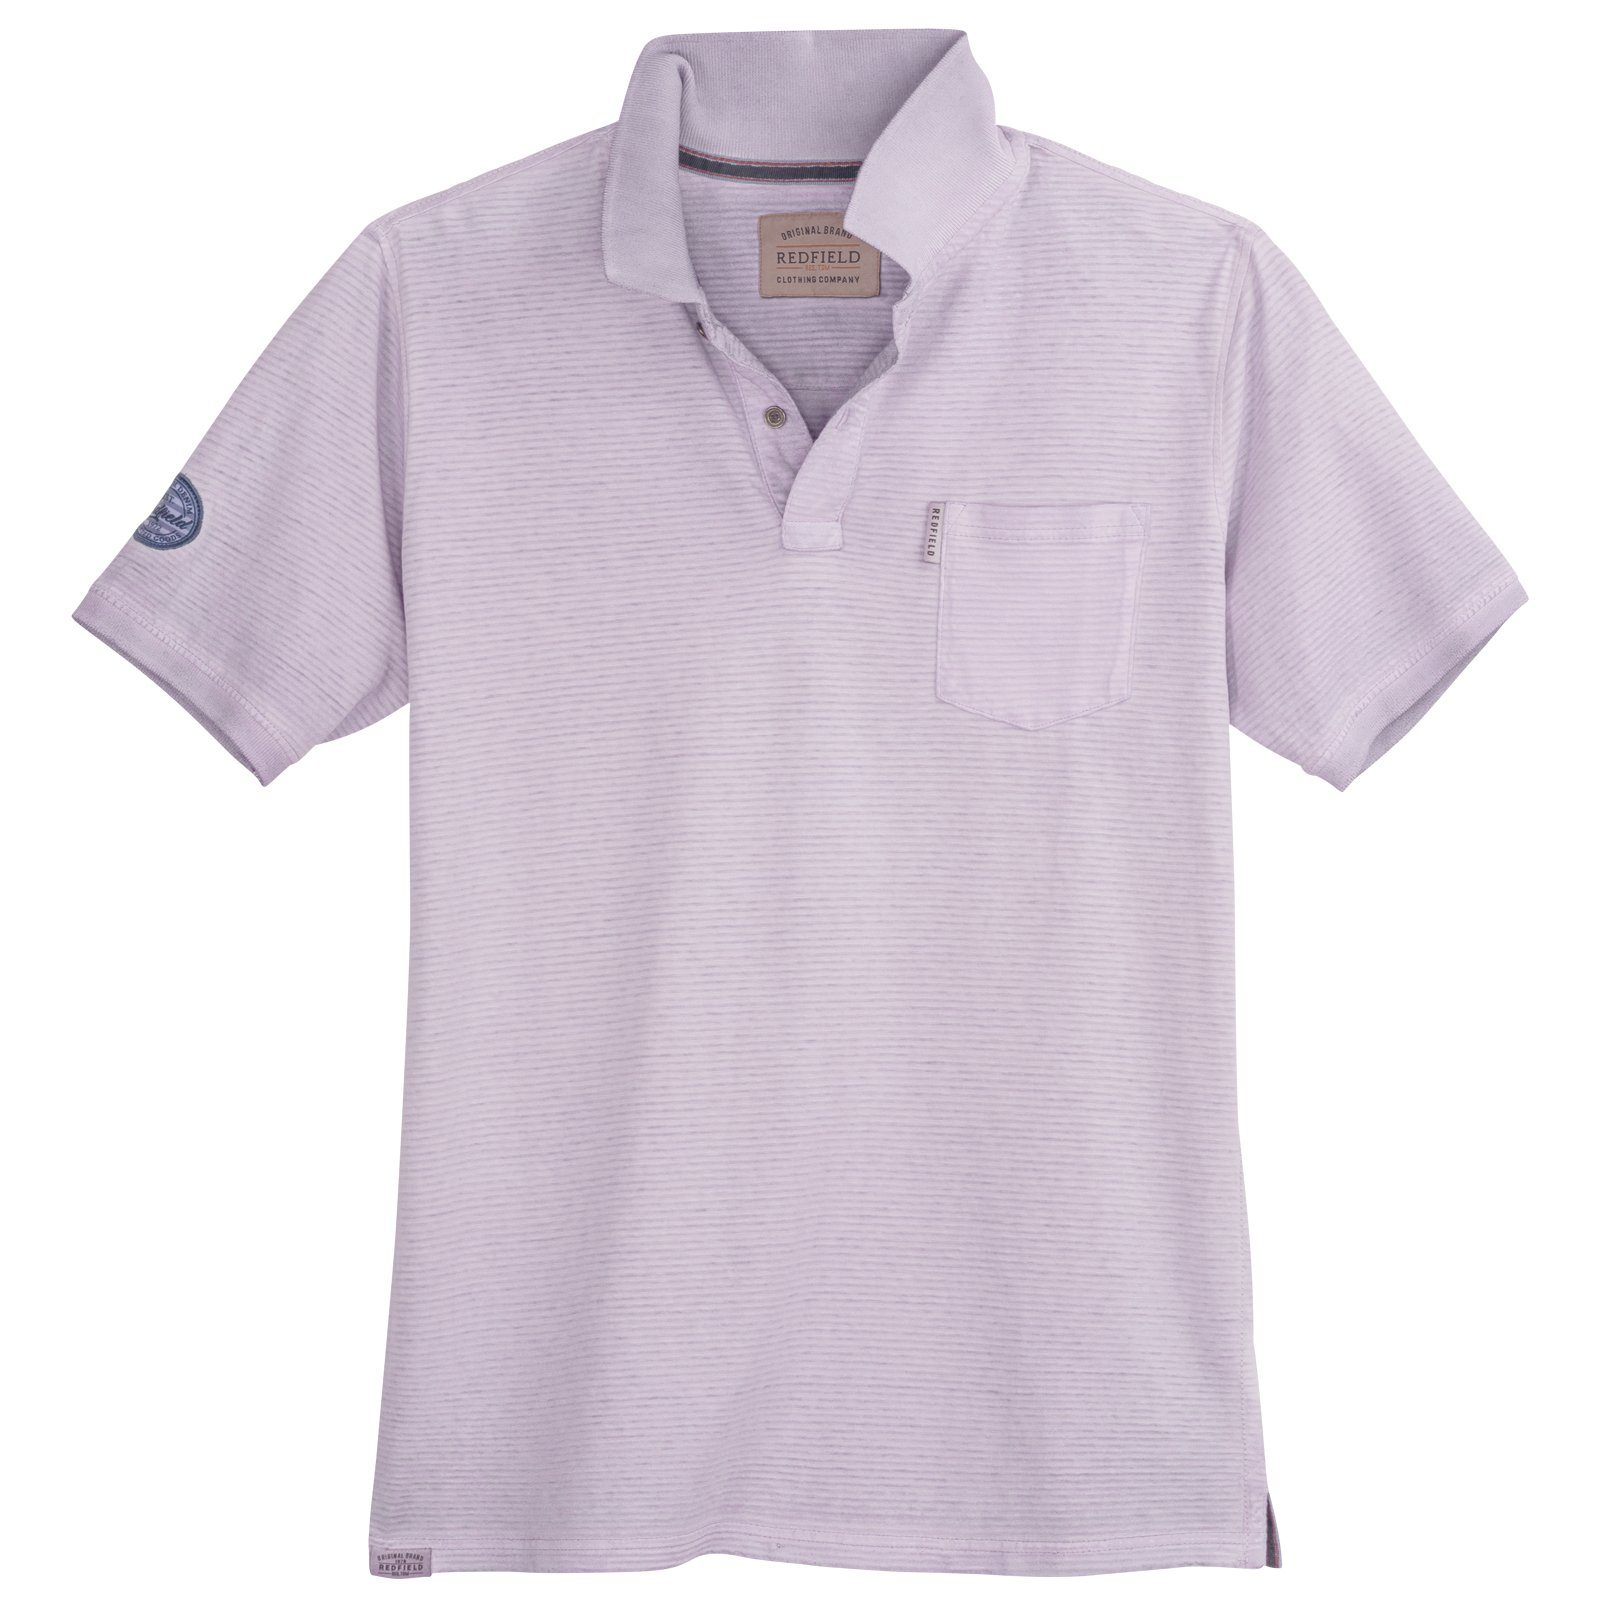 Herren redfield Poloshirt Größen Redfield Used lavendel geringelt Poloshirt Look Große